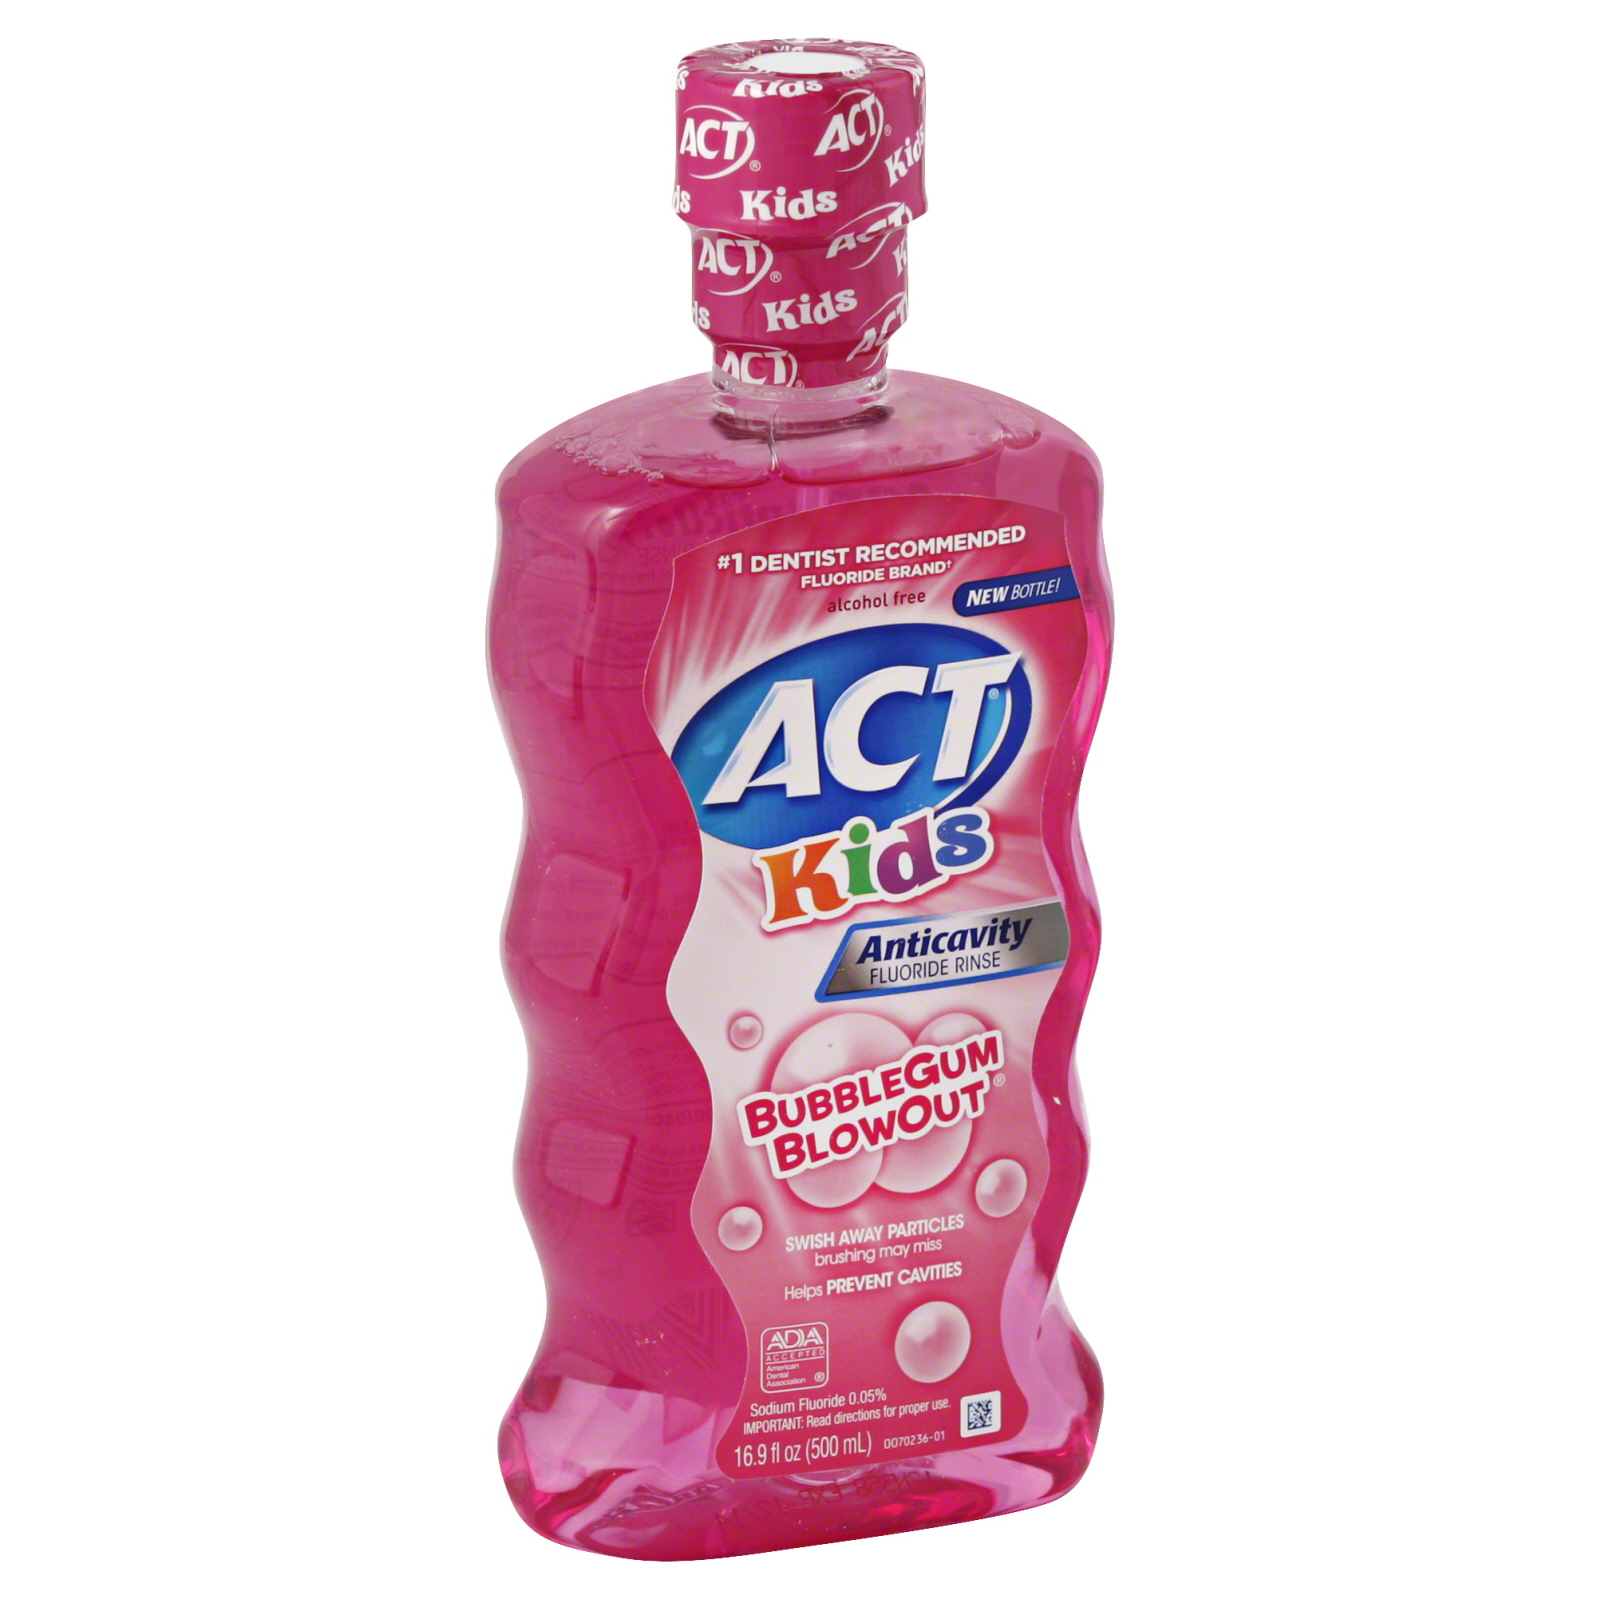 Act Fluoride Rinse, Anti-cavity, Bubble Gum Blow Out, 16.9 fl oz (500 ml)